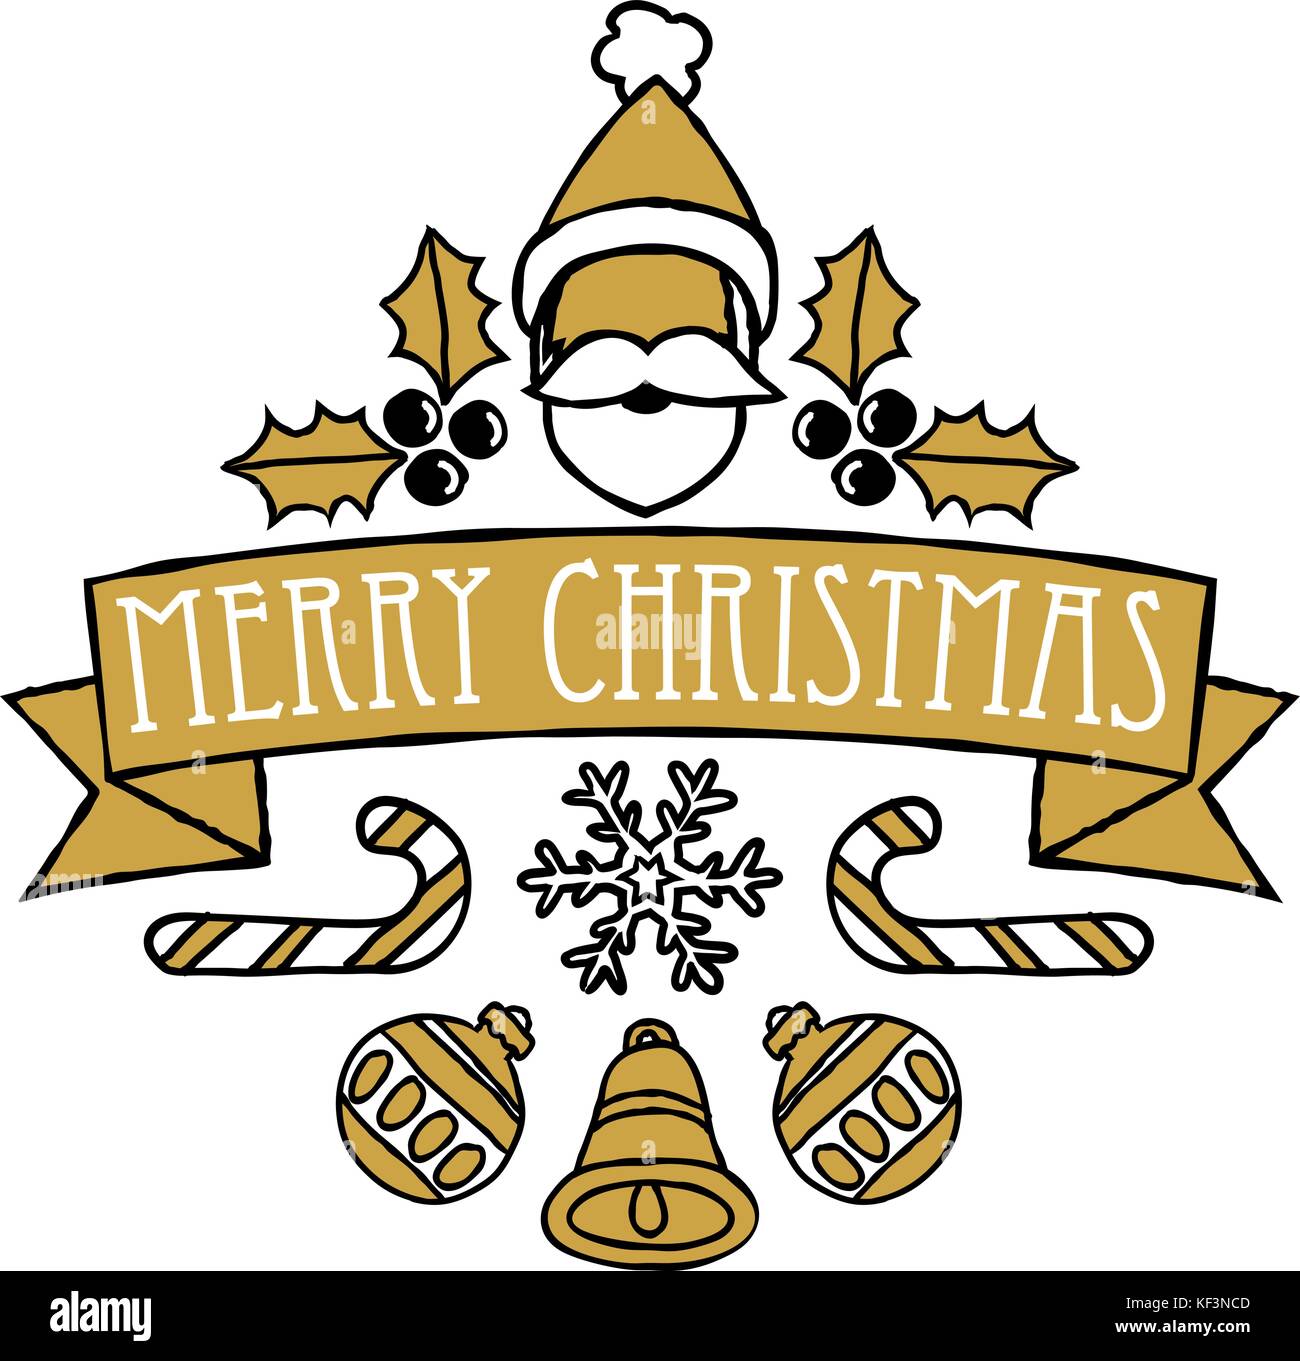 Merry Christmas Greetings Seasonal Design Stock Vector